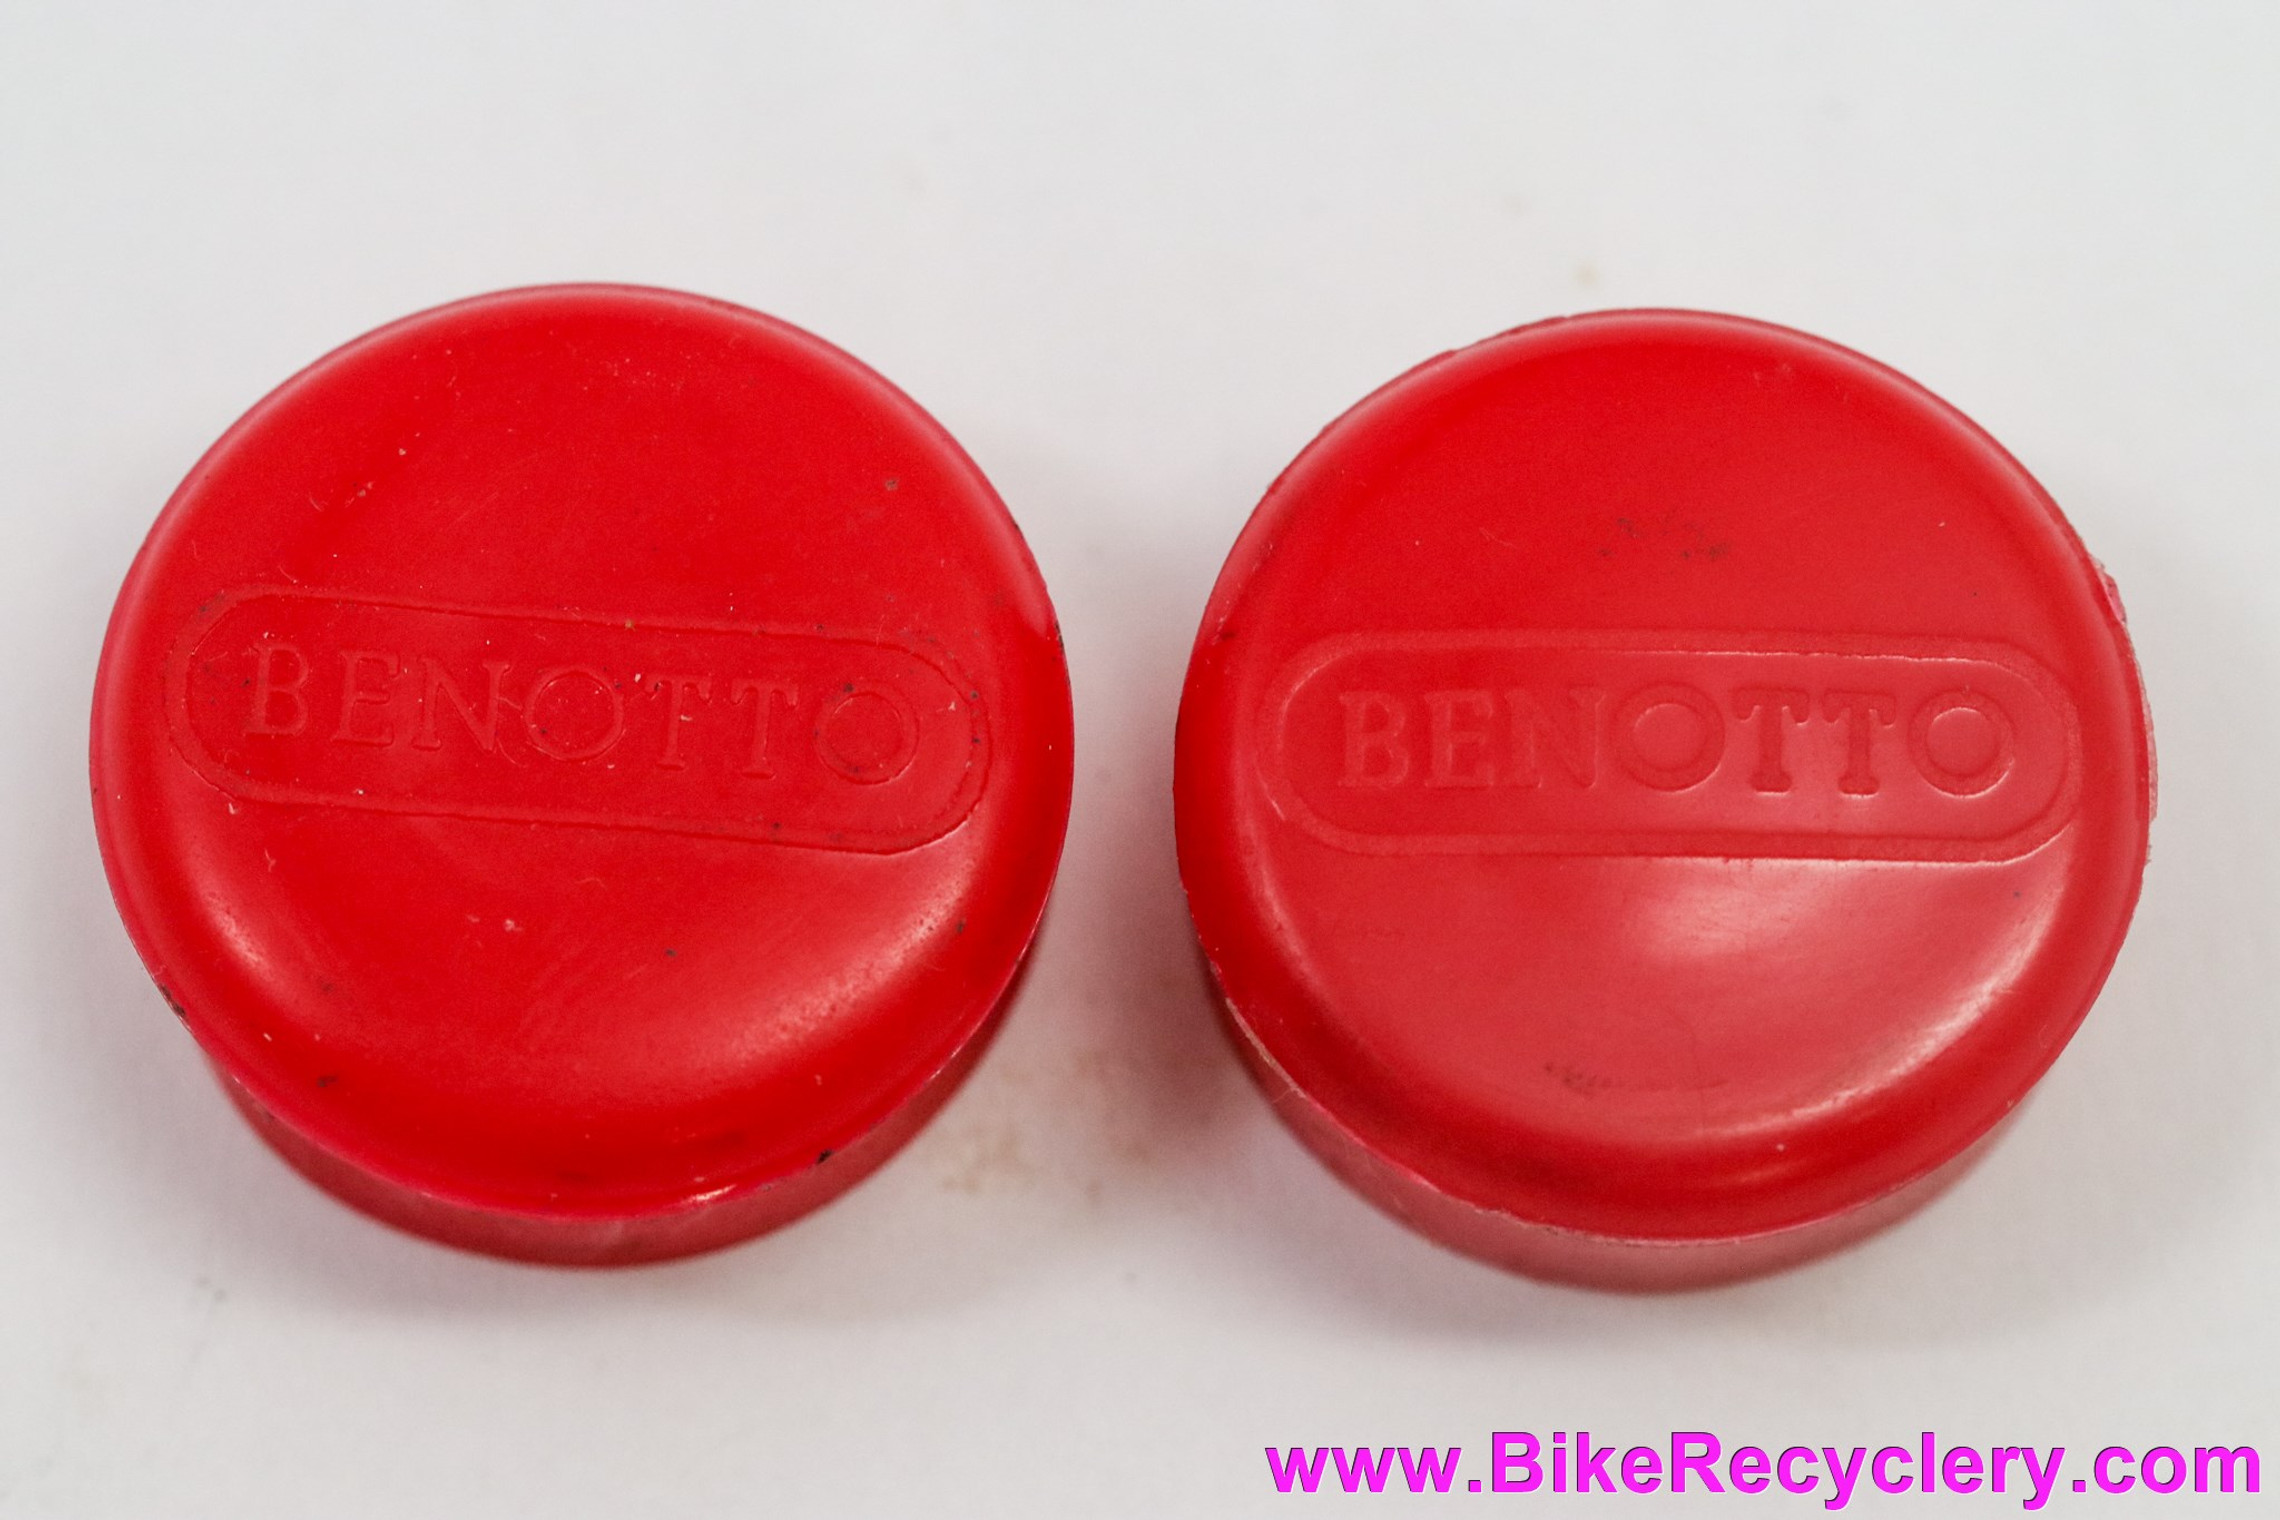 NOS Benotto Rubber Handlebar End Caps Red (Pair, shop dirt)